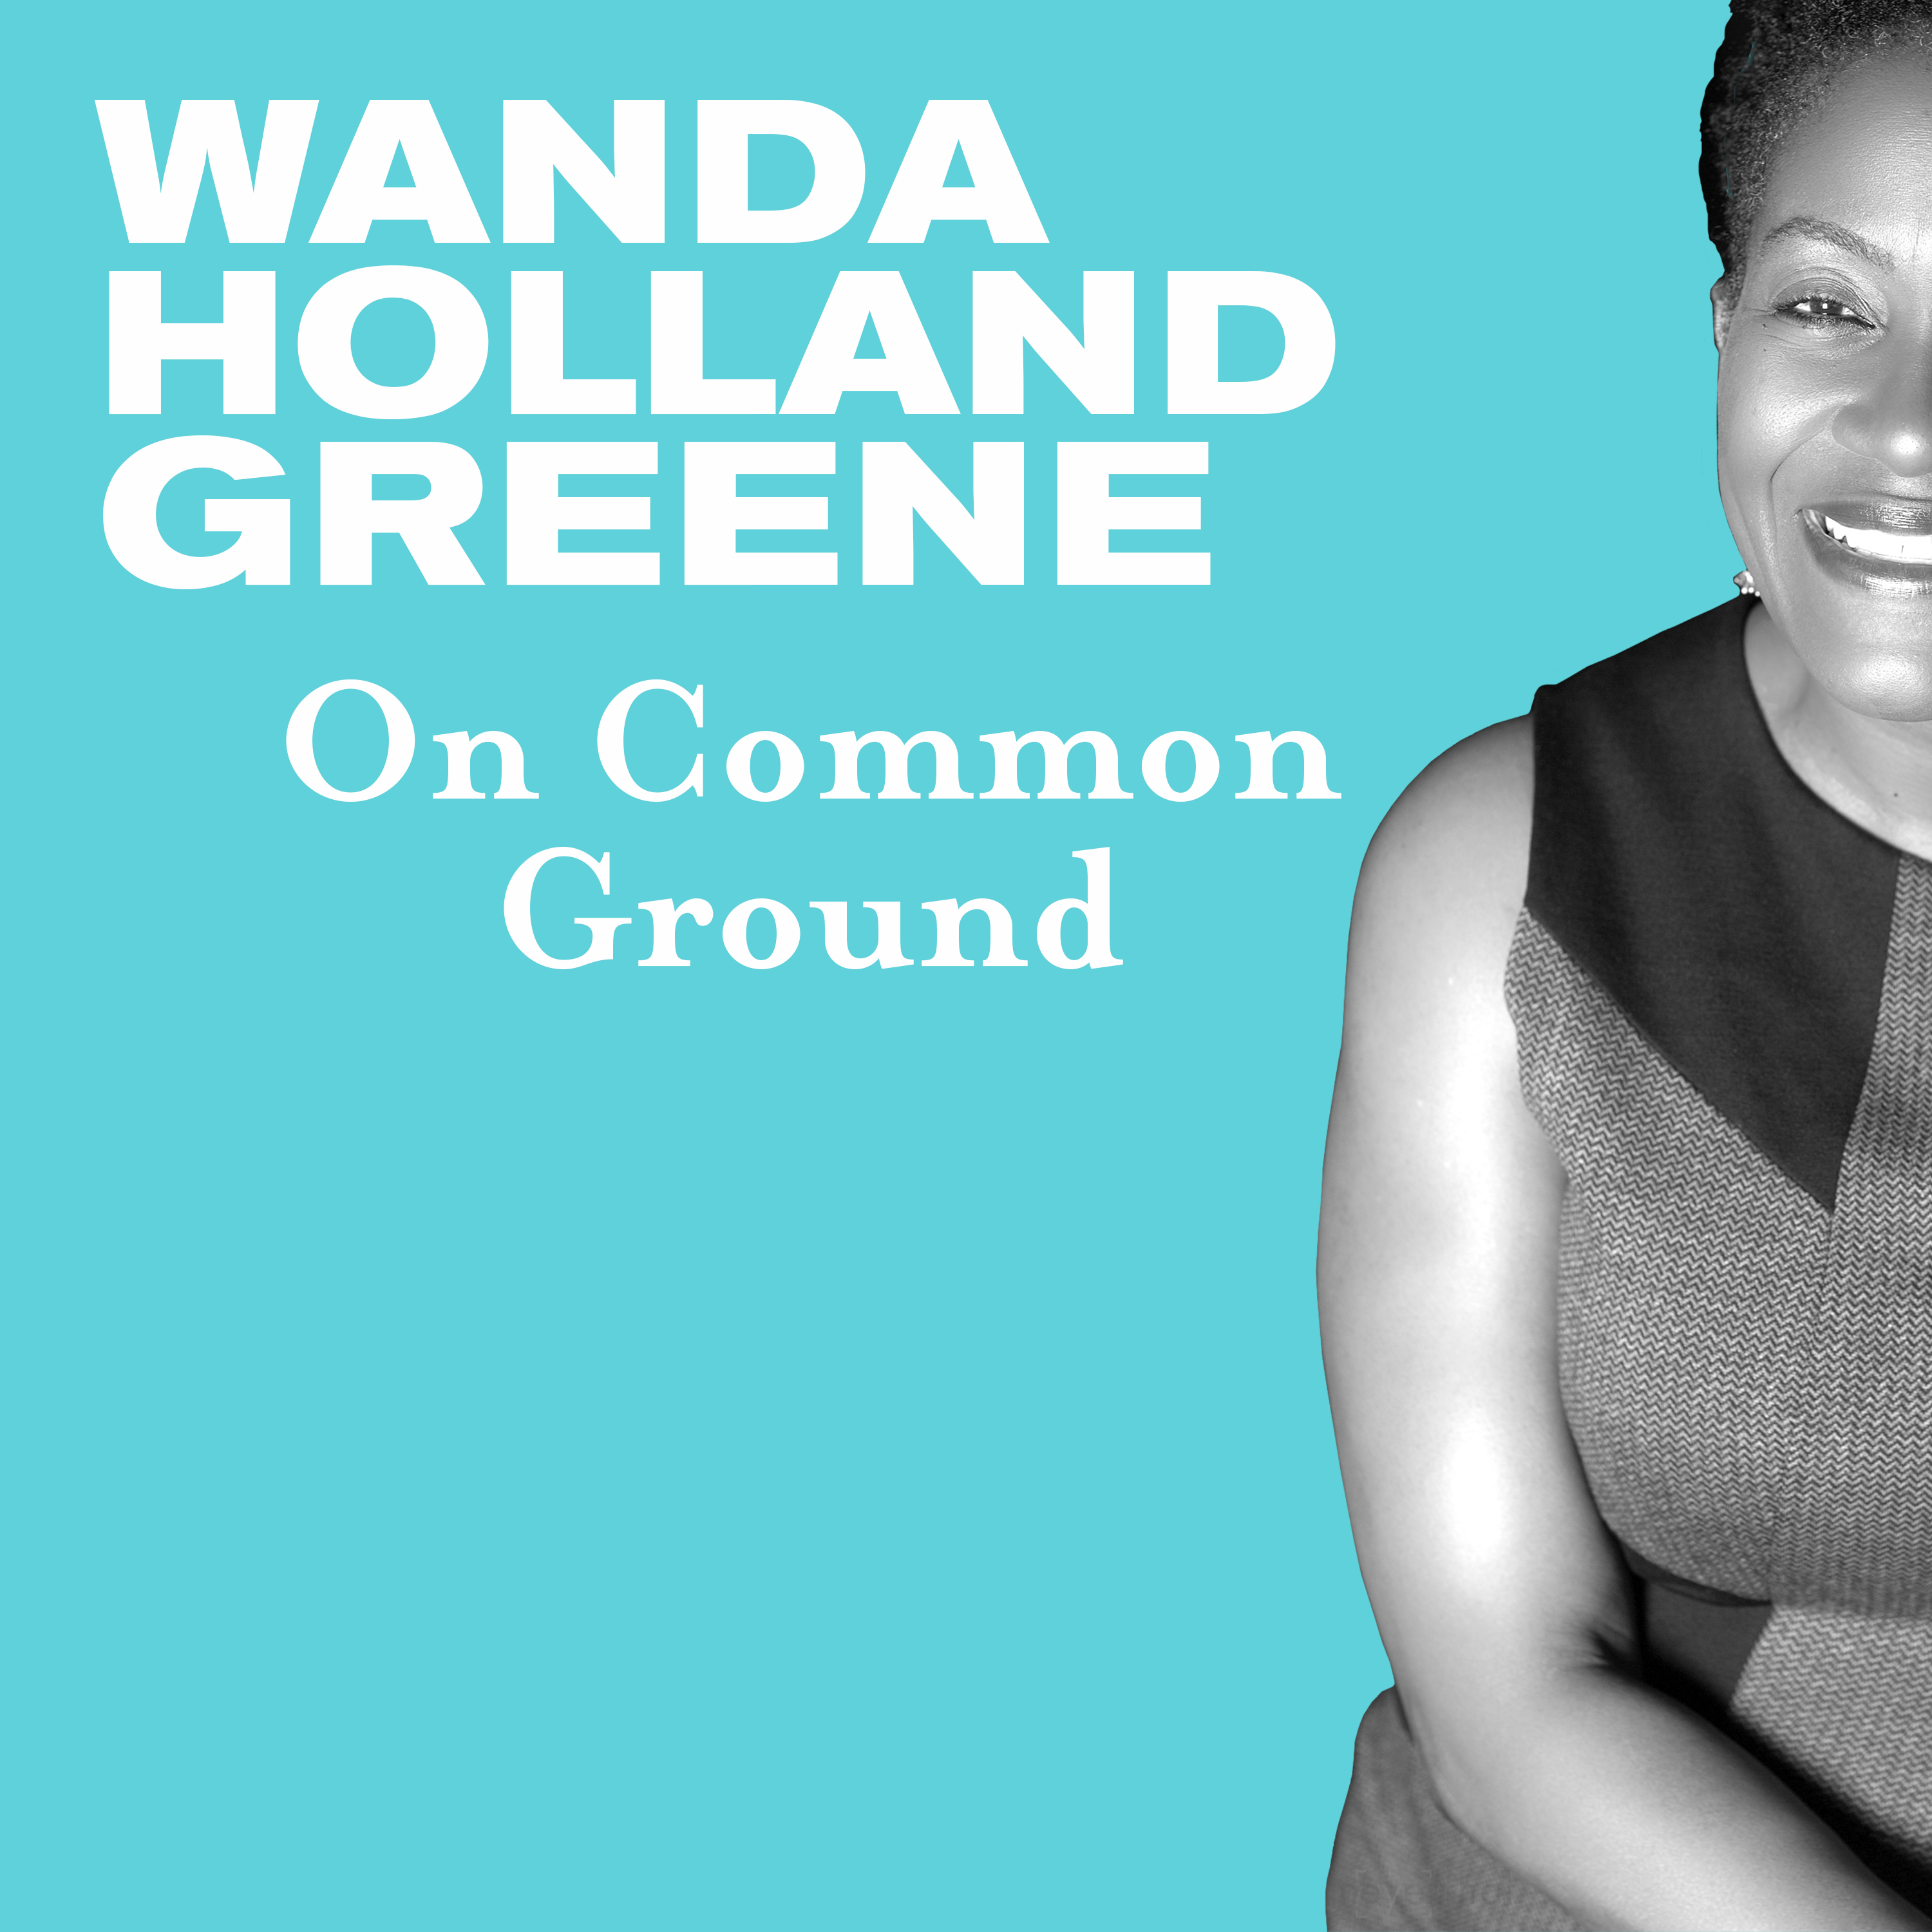 Finding Common Ground with Wanda Holland Greene